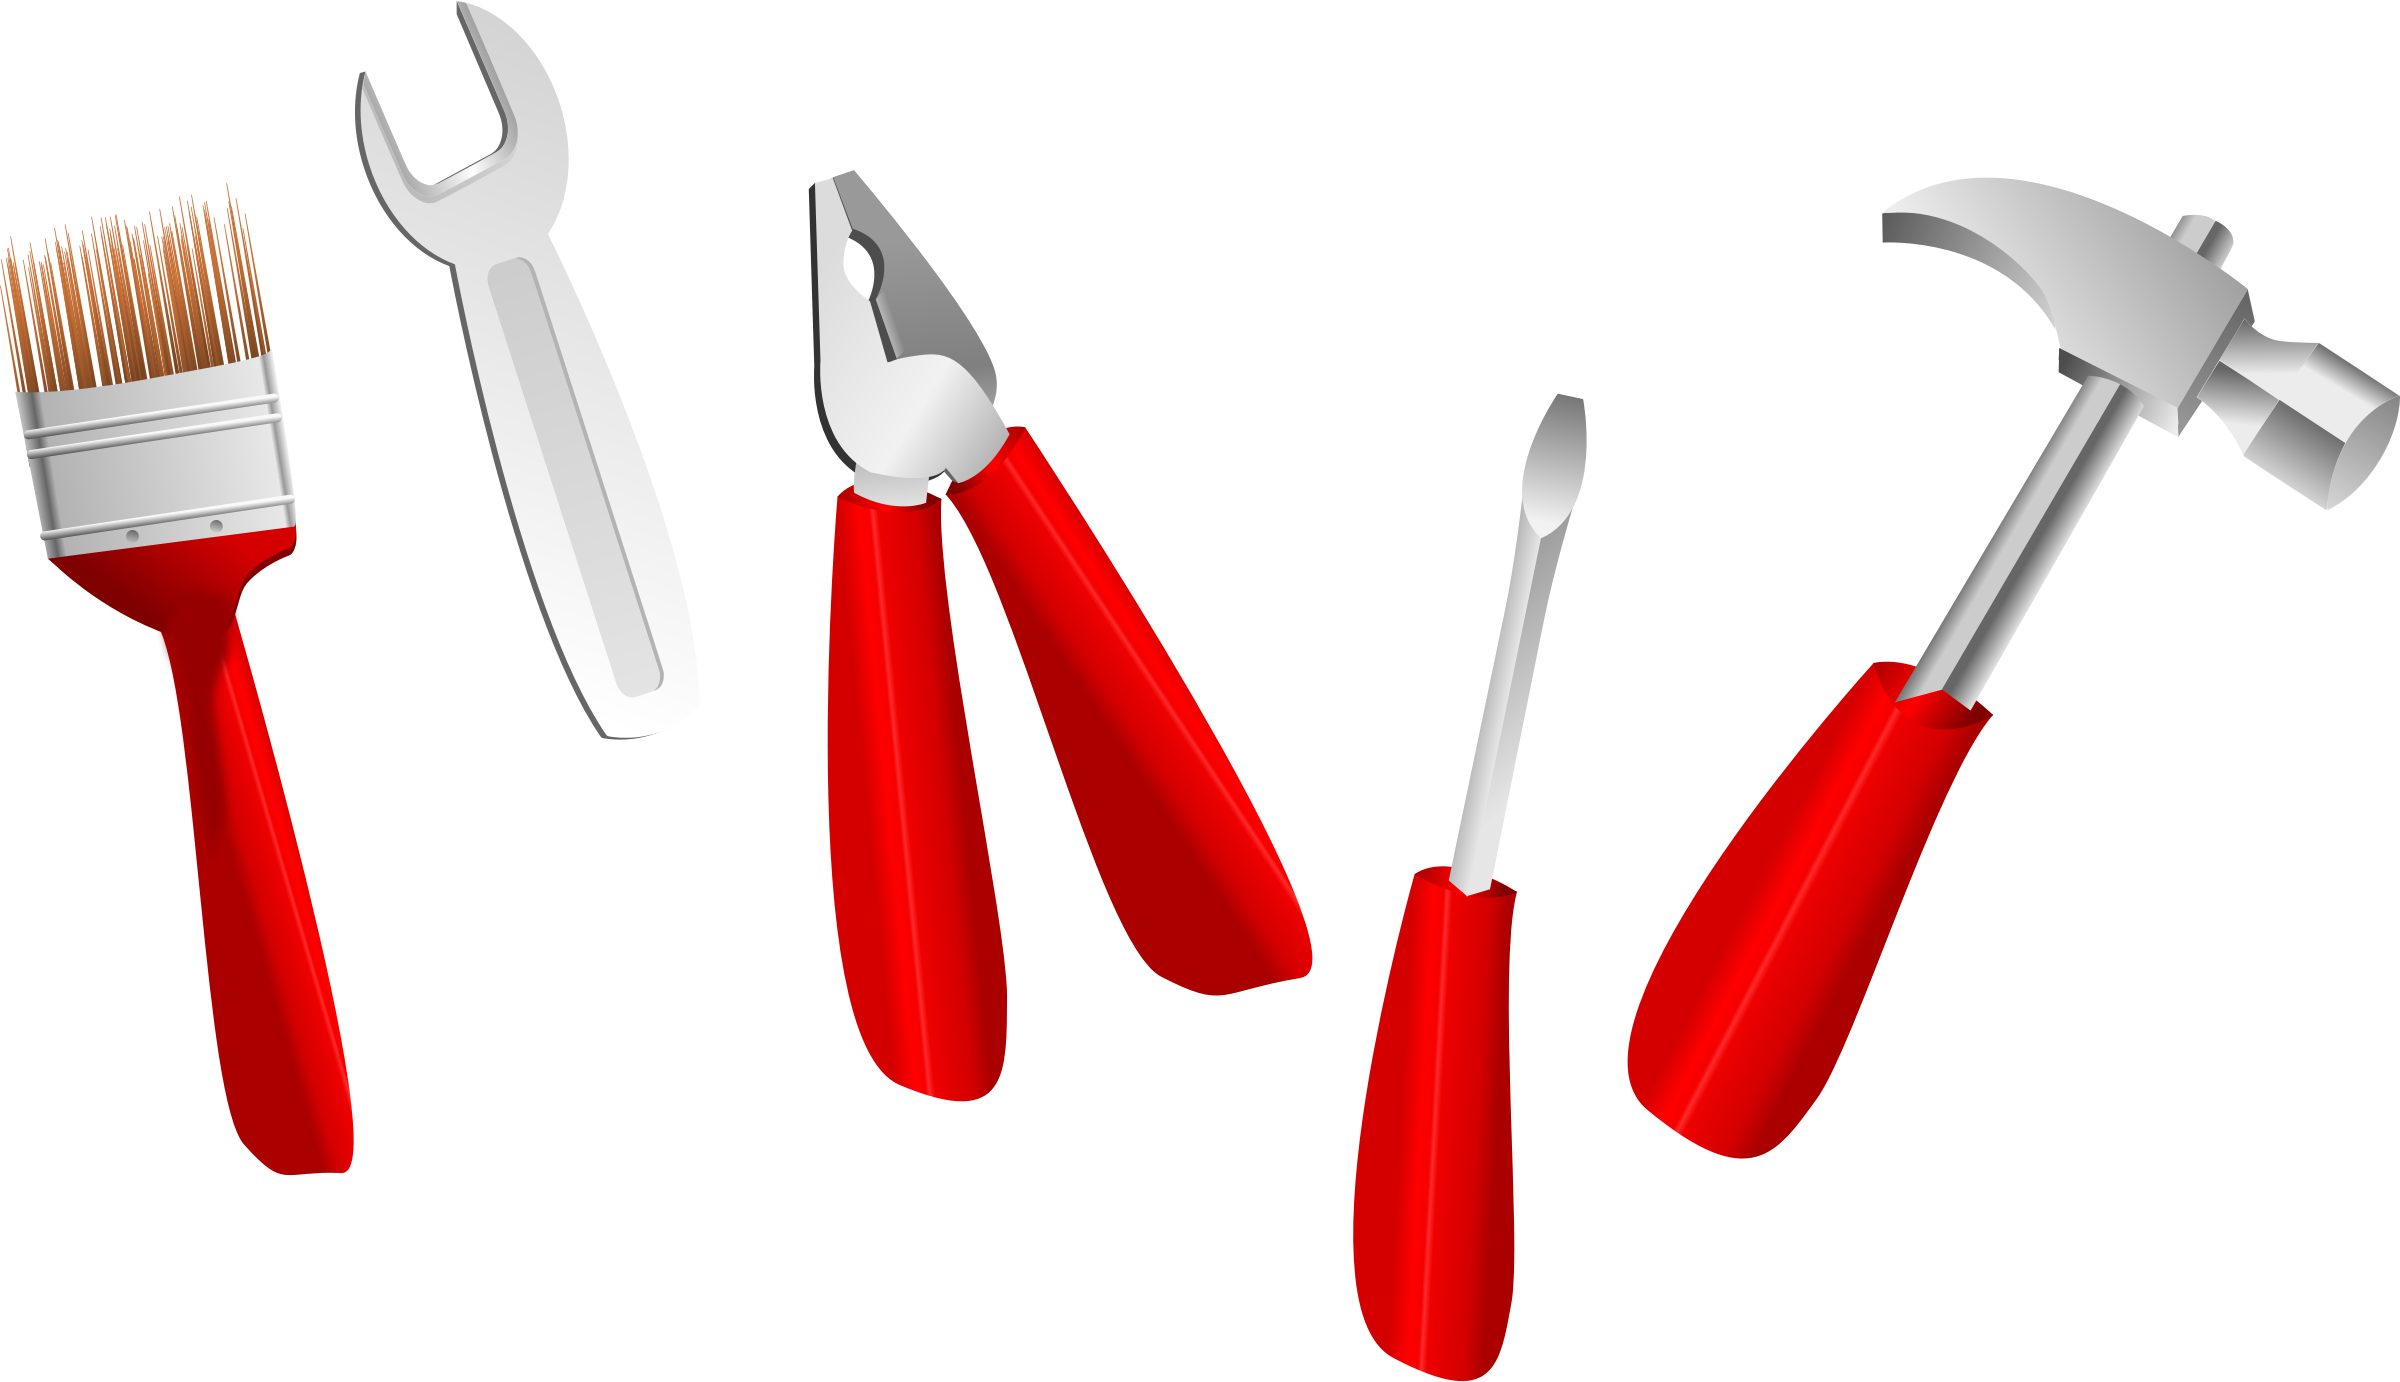 tool clipart hand tool